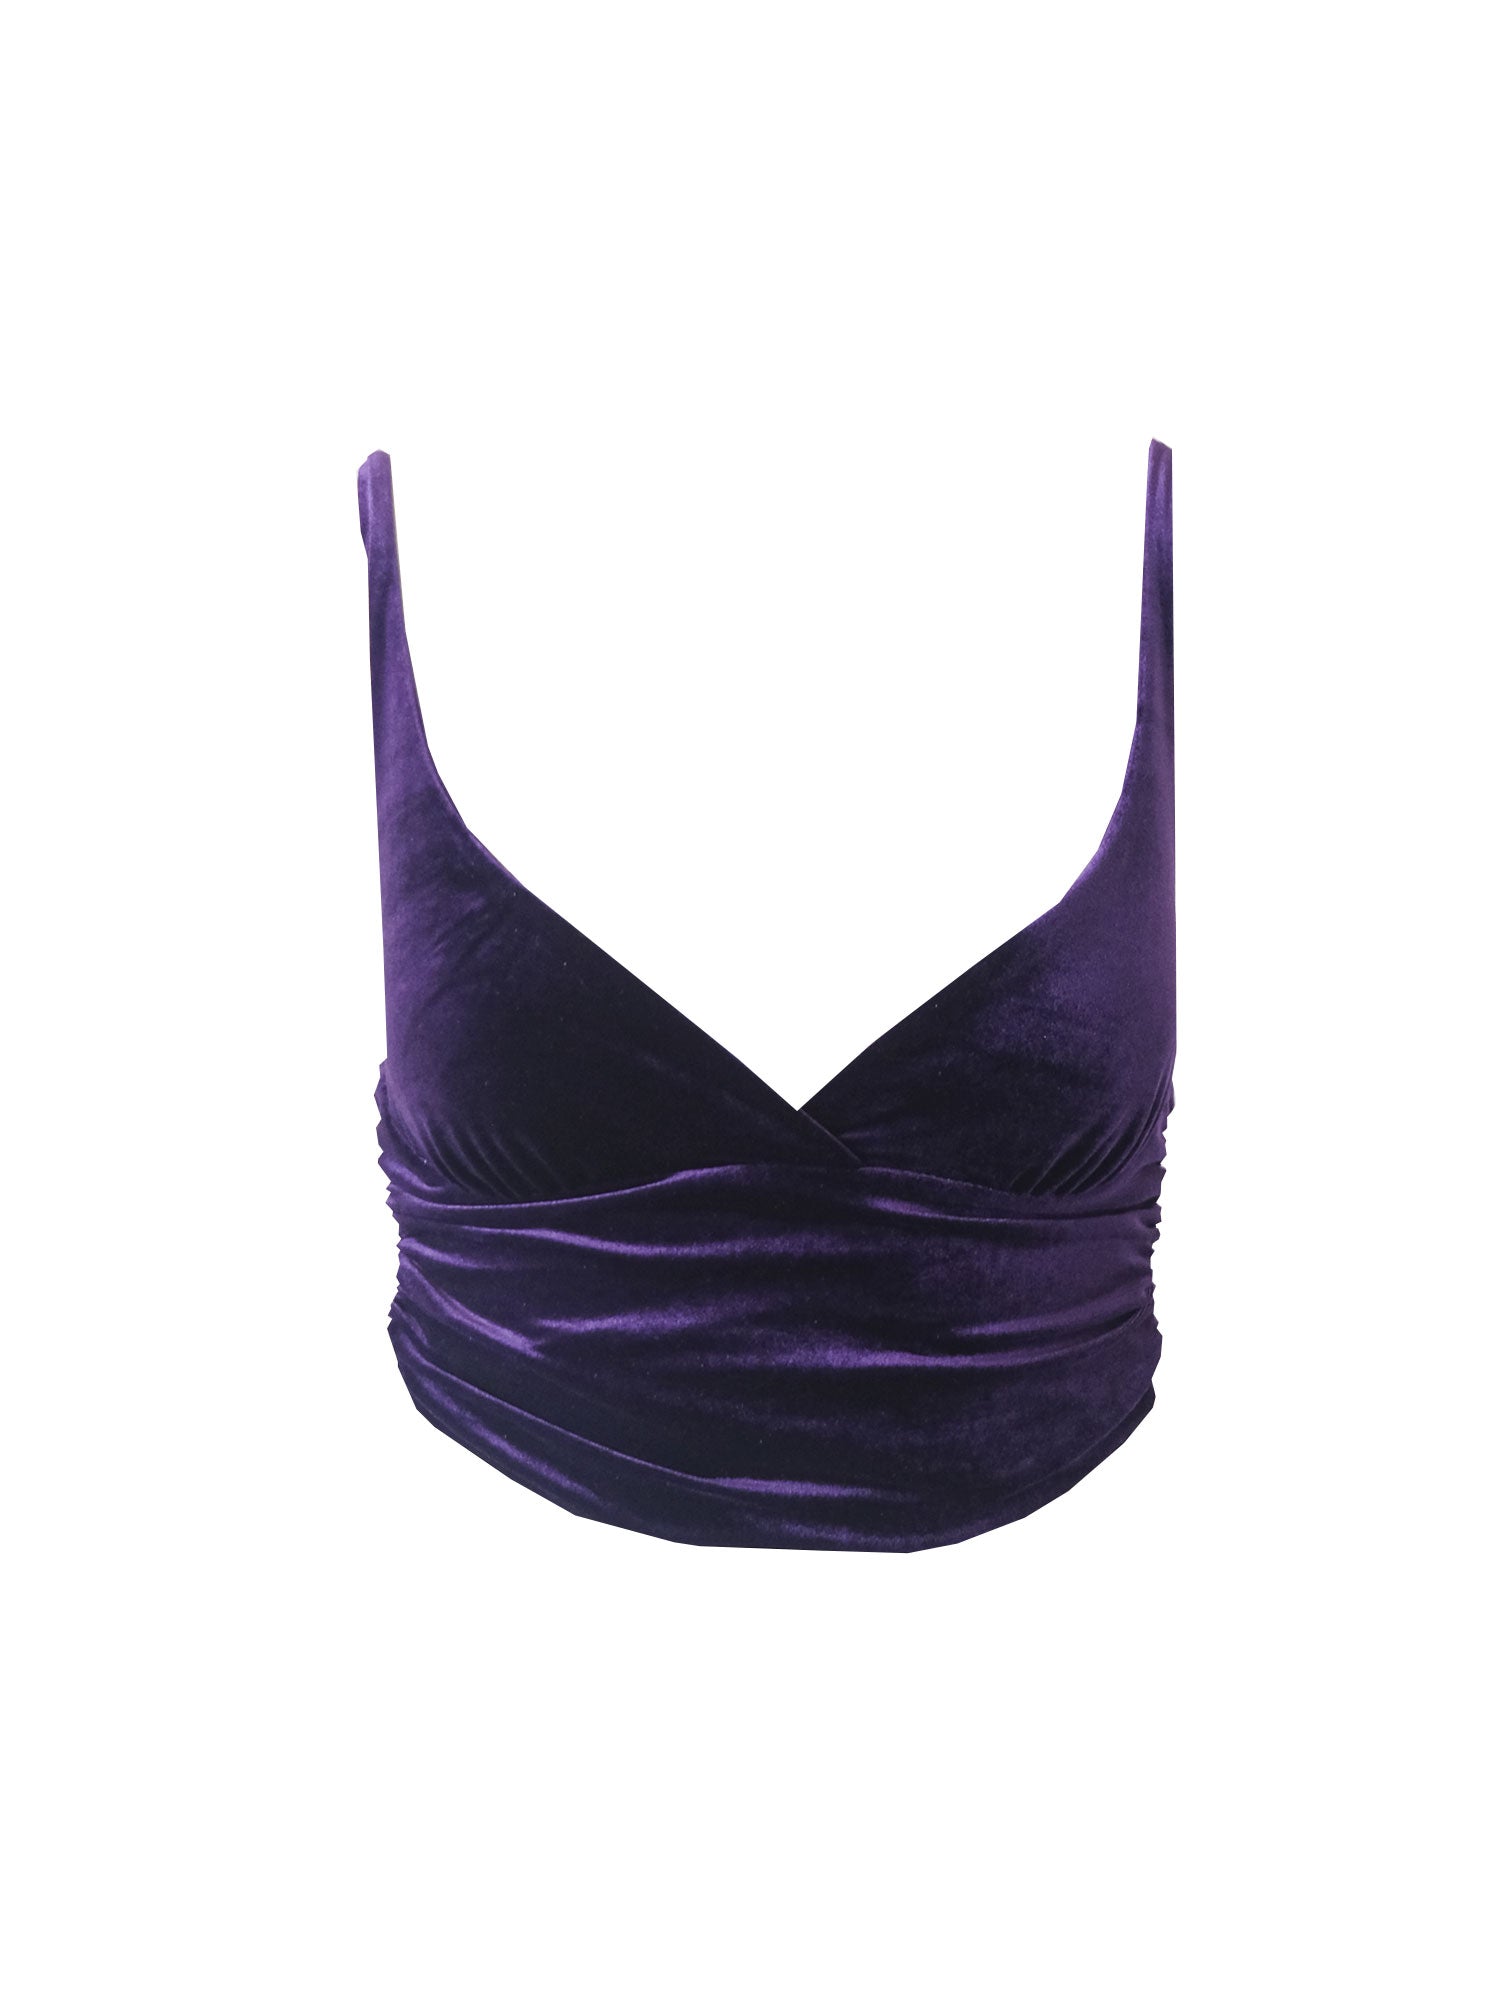 ARIEL - purple top in chenille